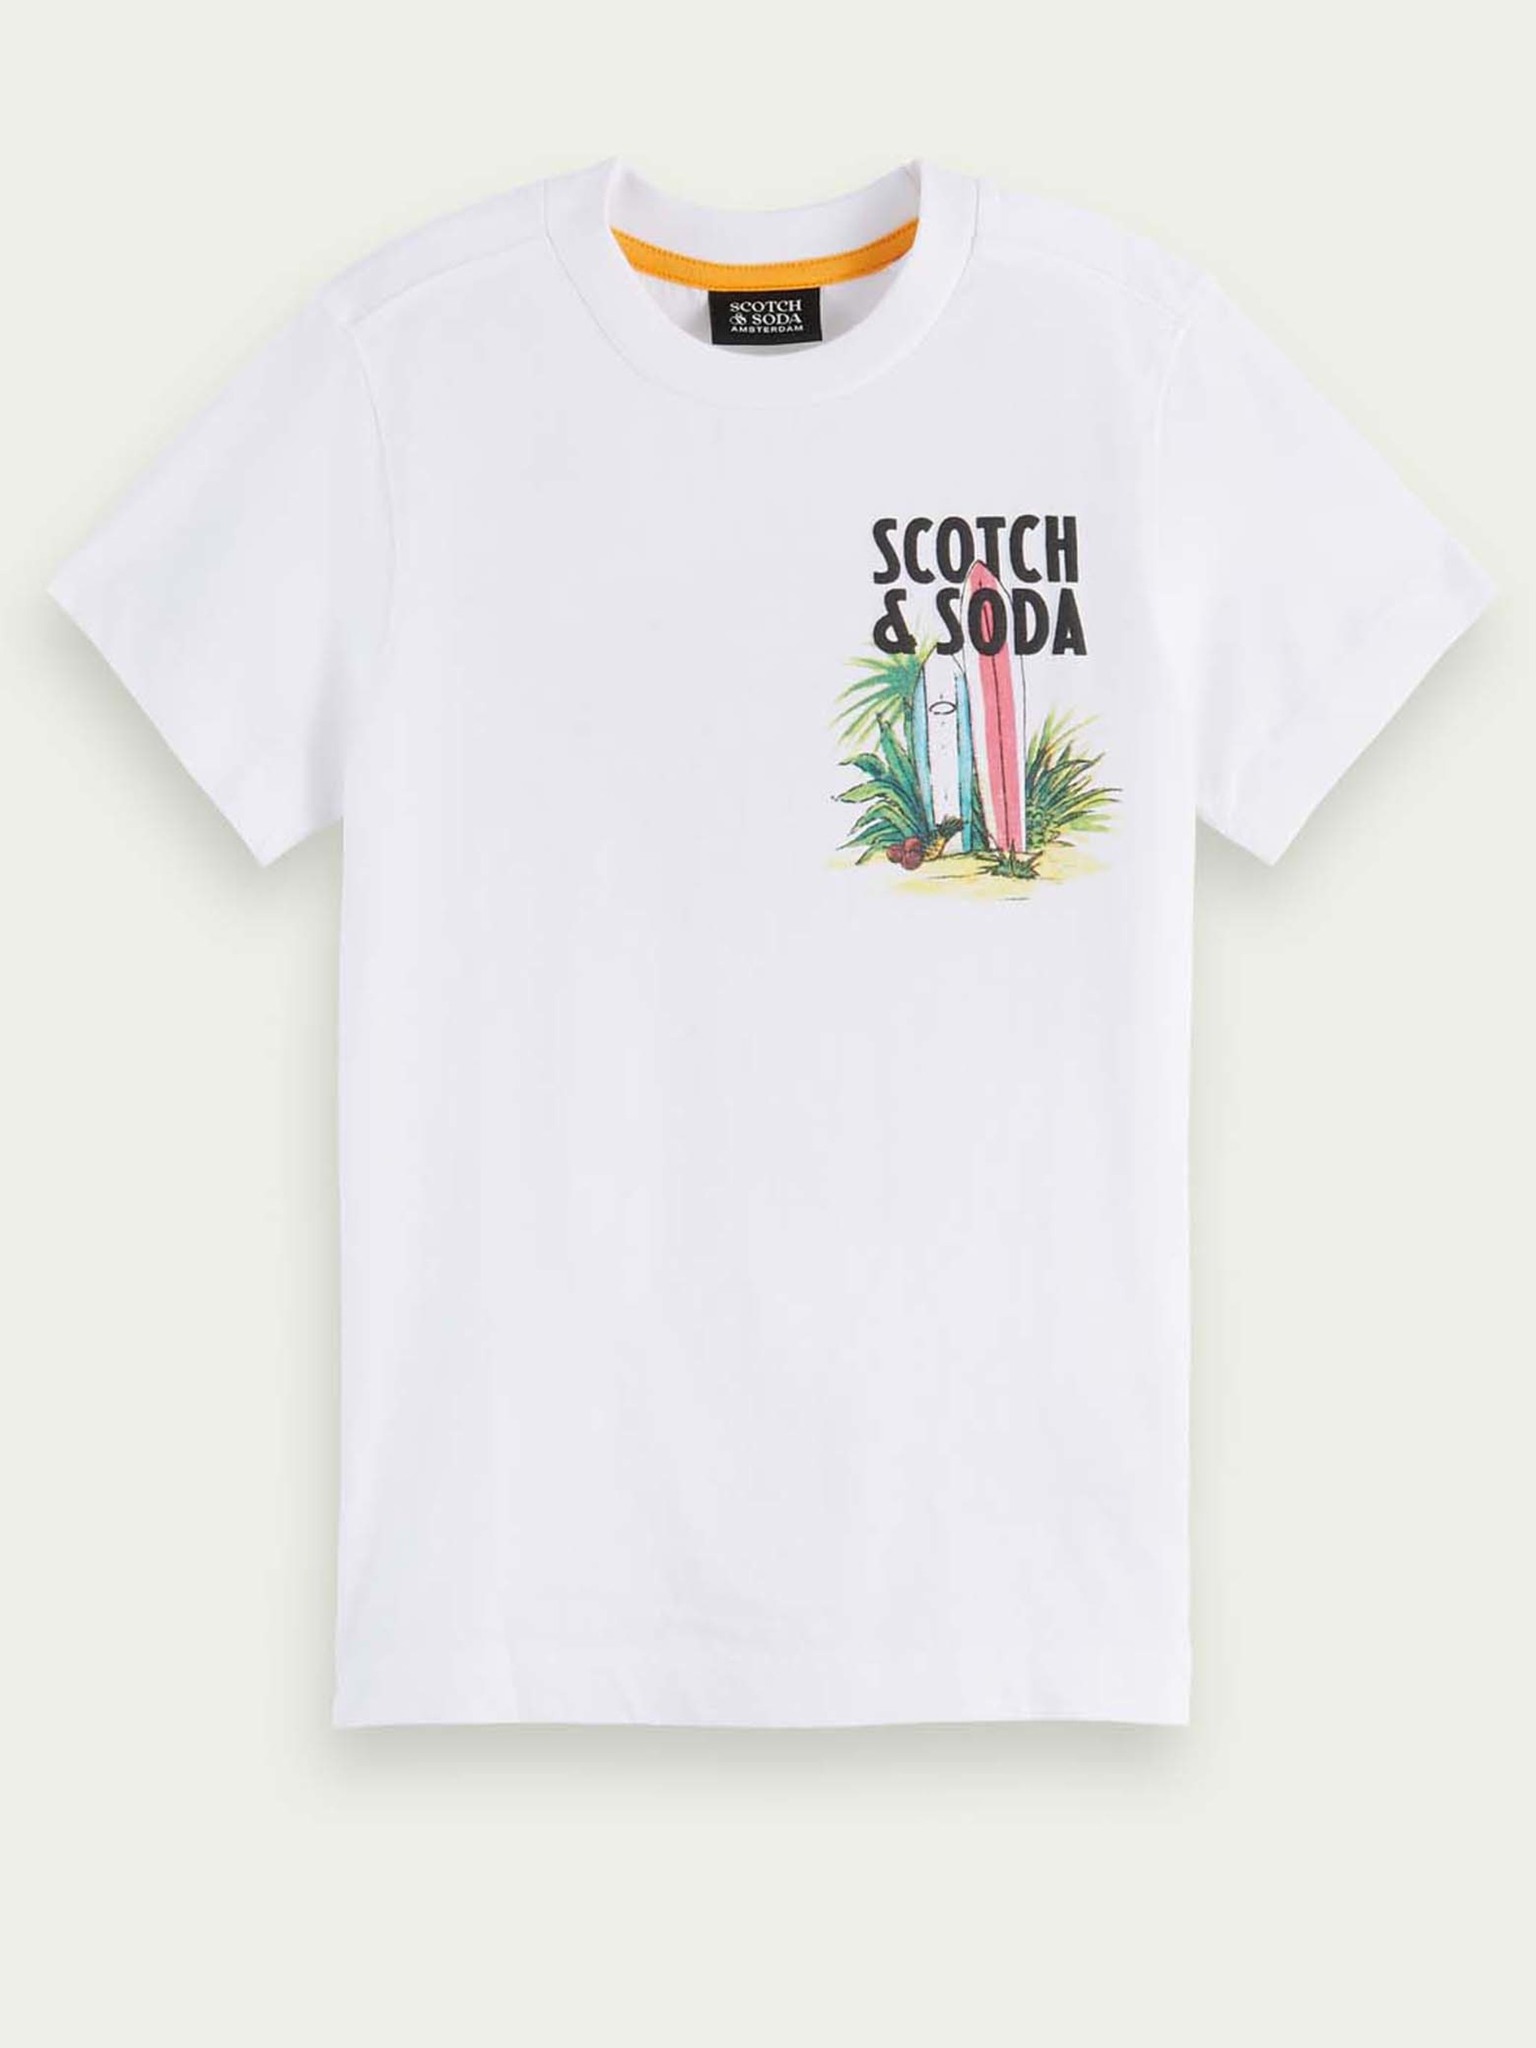 Sow Inward shallow Scotch & Soda - Kids T-shirt Bibloo.com